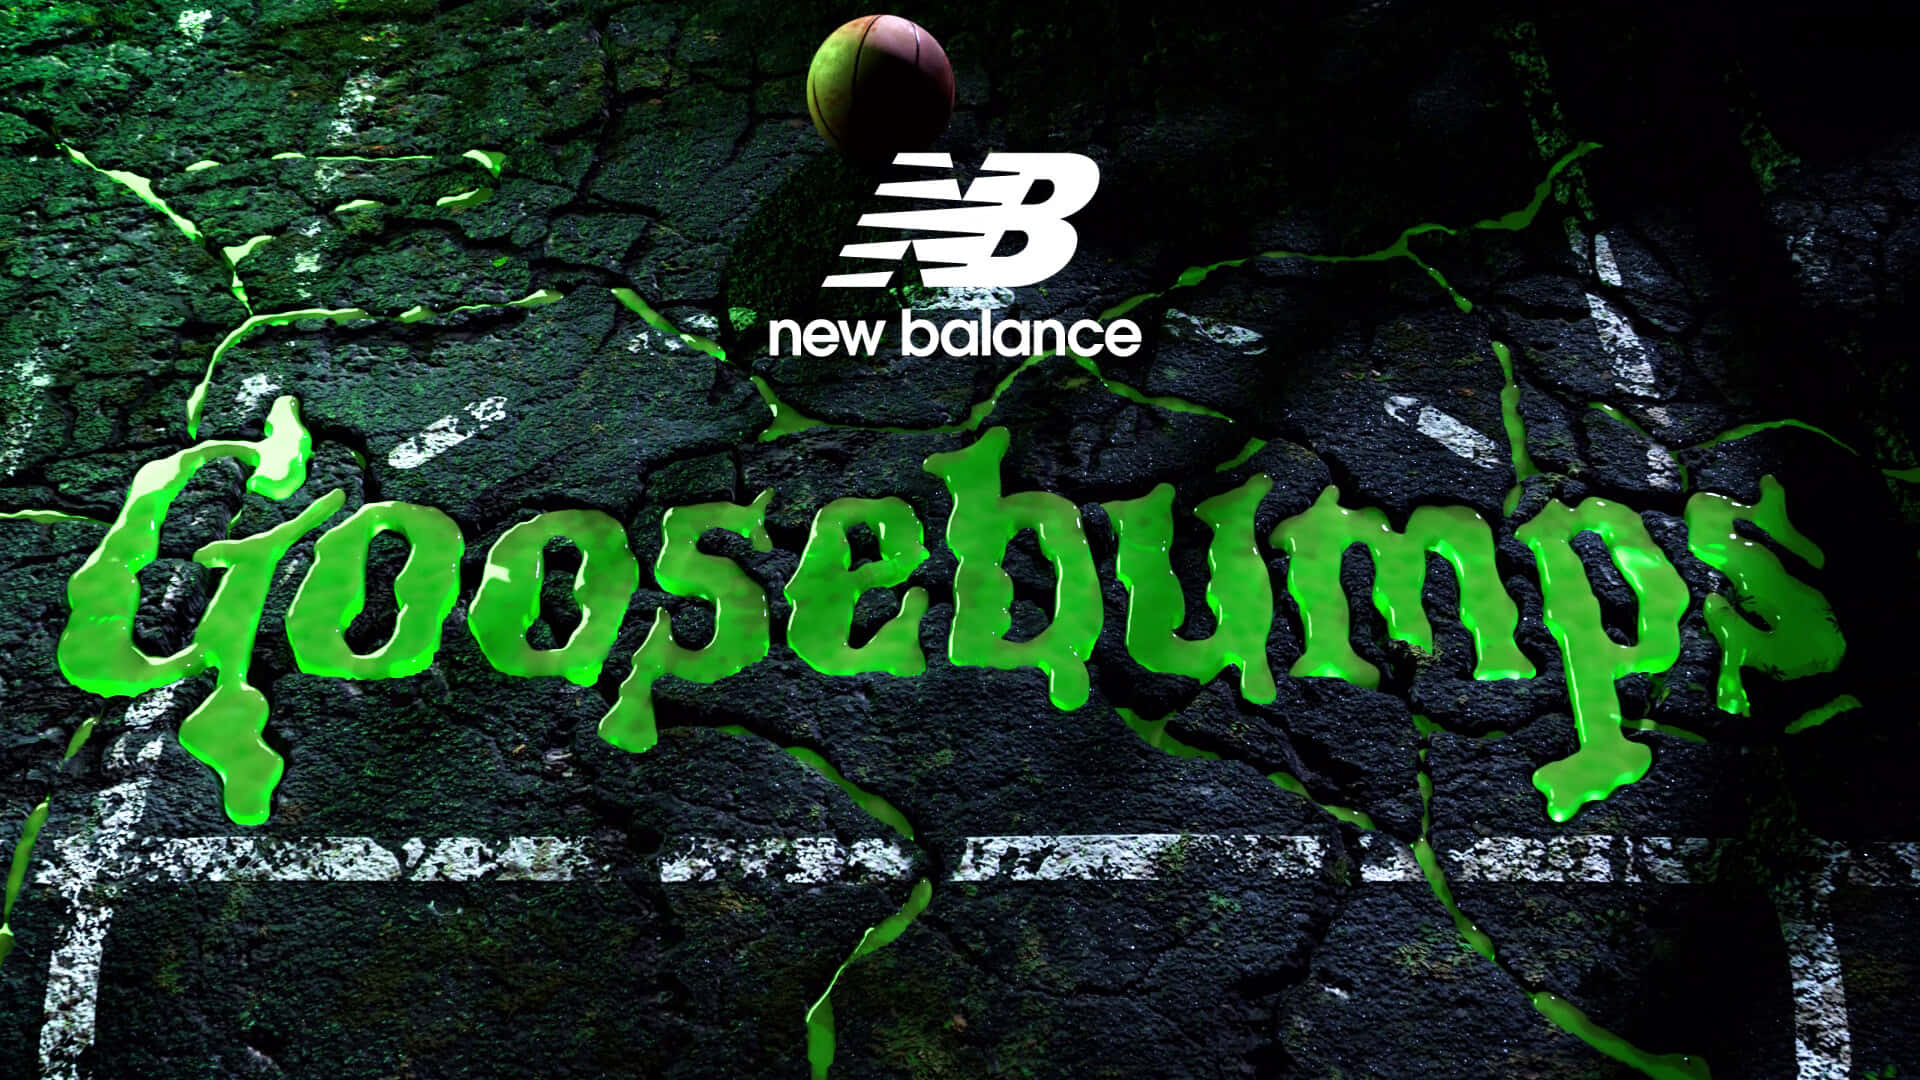 New Balance Goosebumps - A Green Football On A Green Background